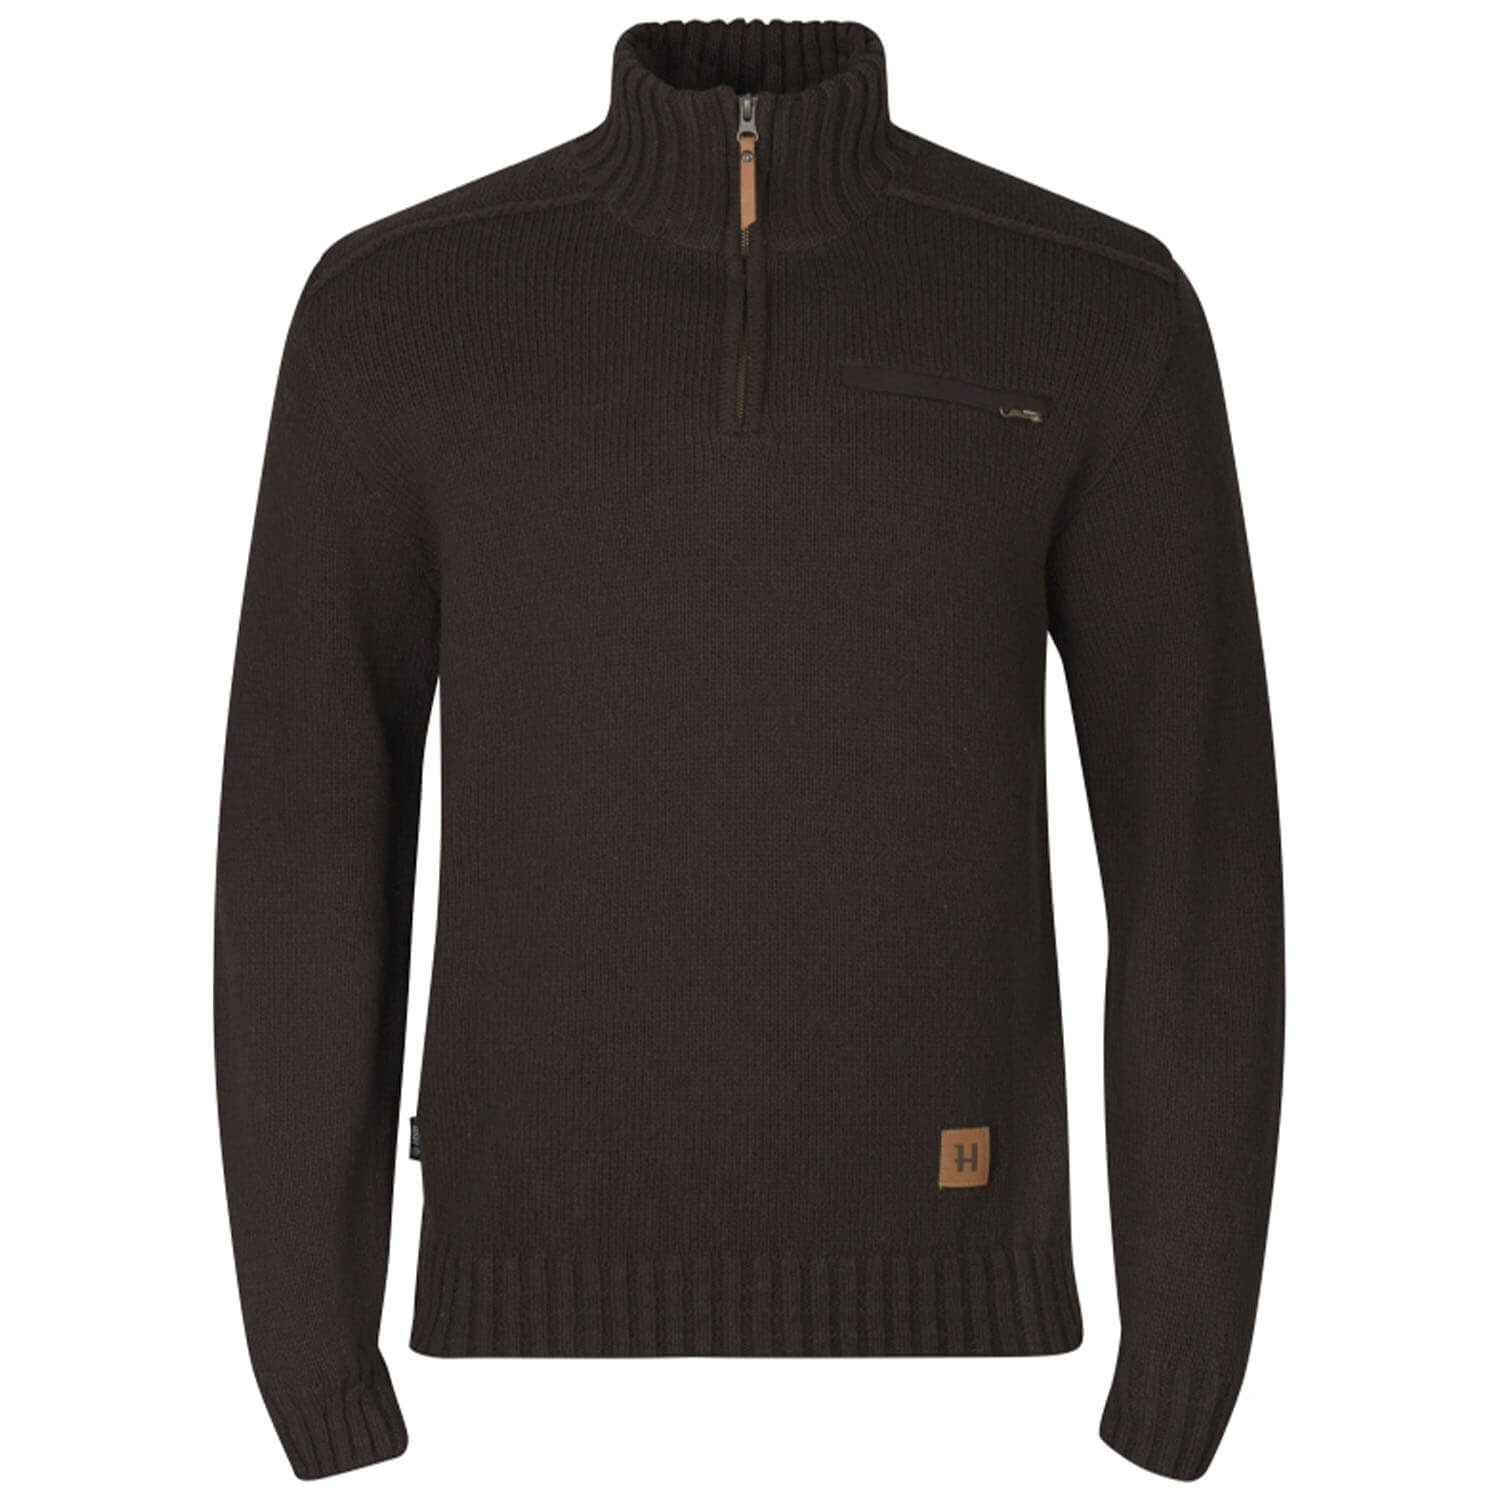 Härkila sweater annaboda 2.0 HSP (demitasse brown) - Sweaters & Vests